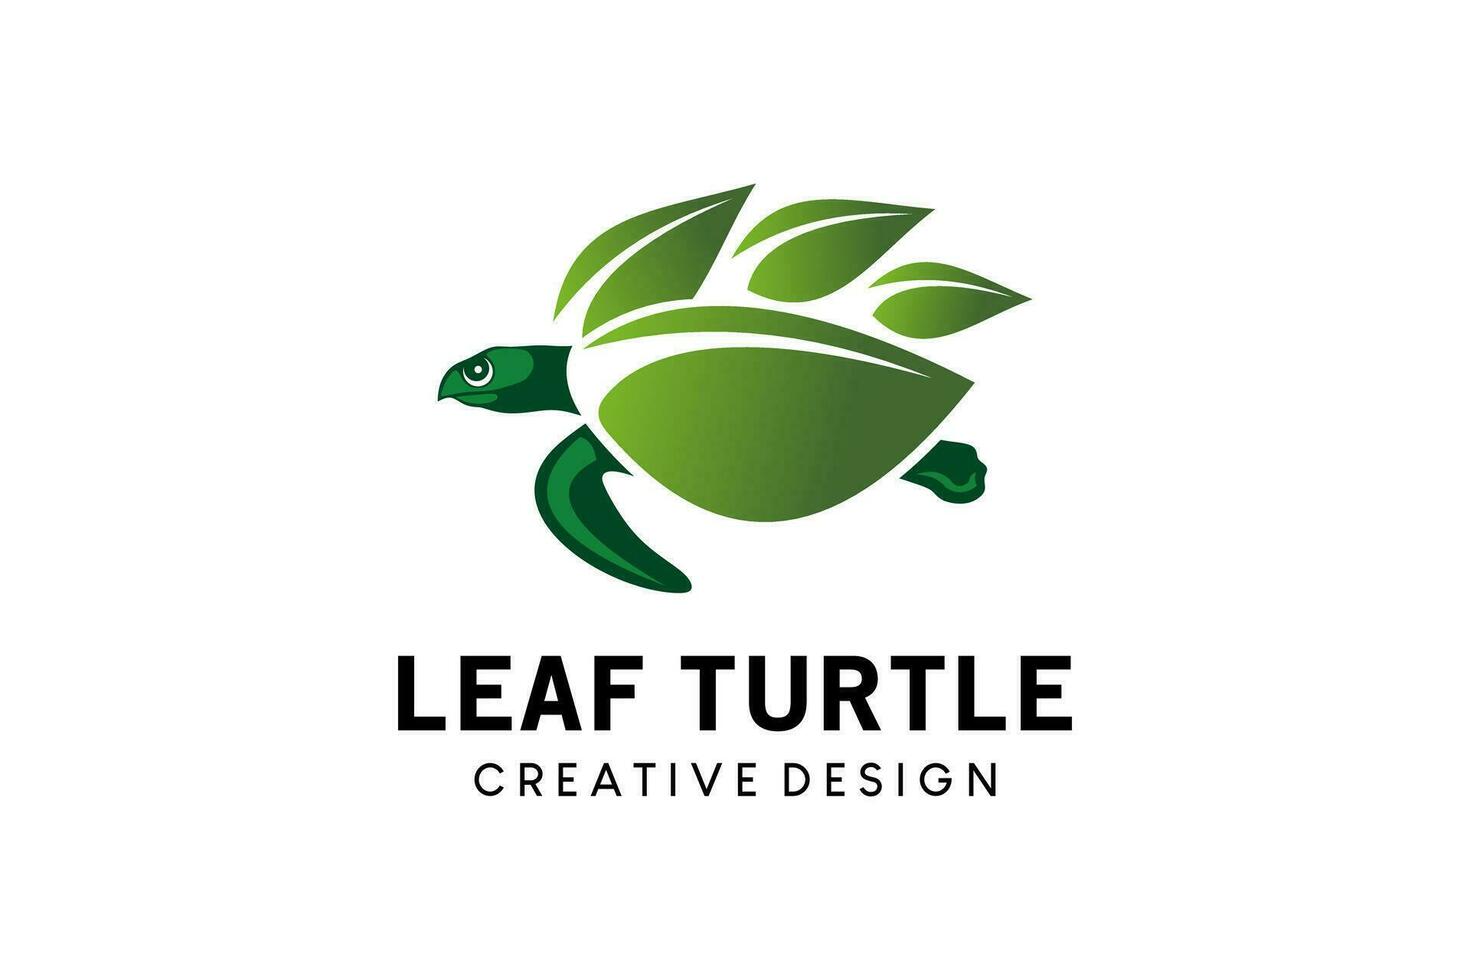 Nature leaf turtle logo design creative concept vector